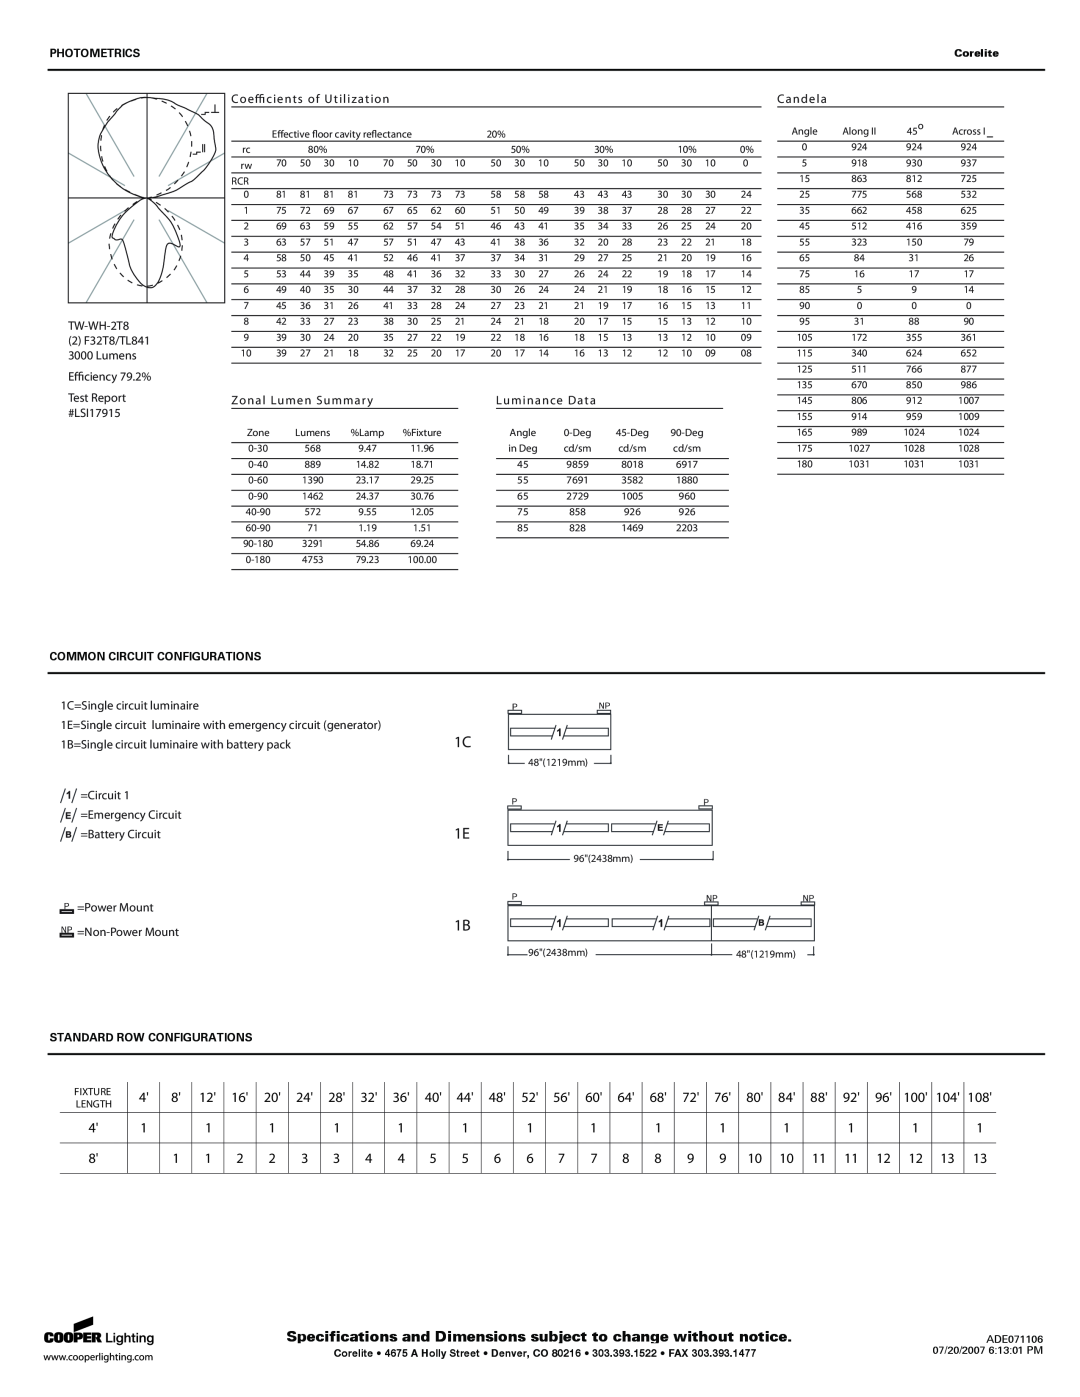 Cooper Lighting 2T8 specifications PHOTOMETRICSCorelite, Common Circuit Configurations, Standard Row Configurations 